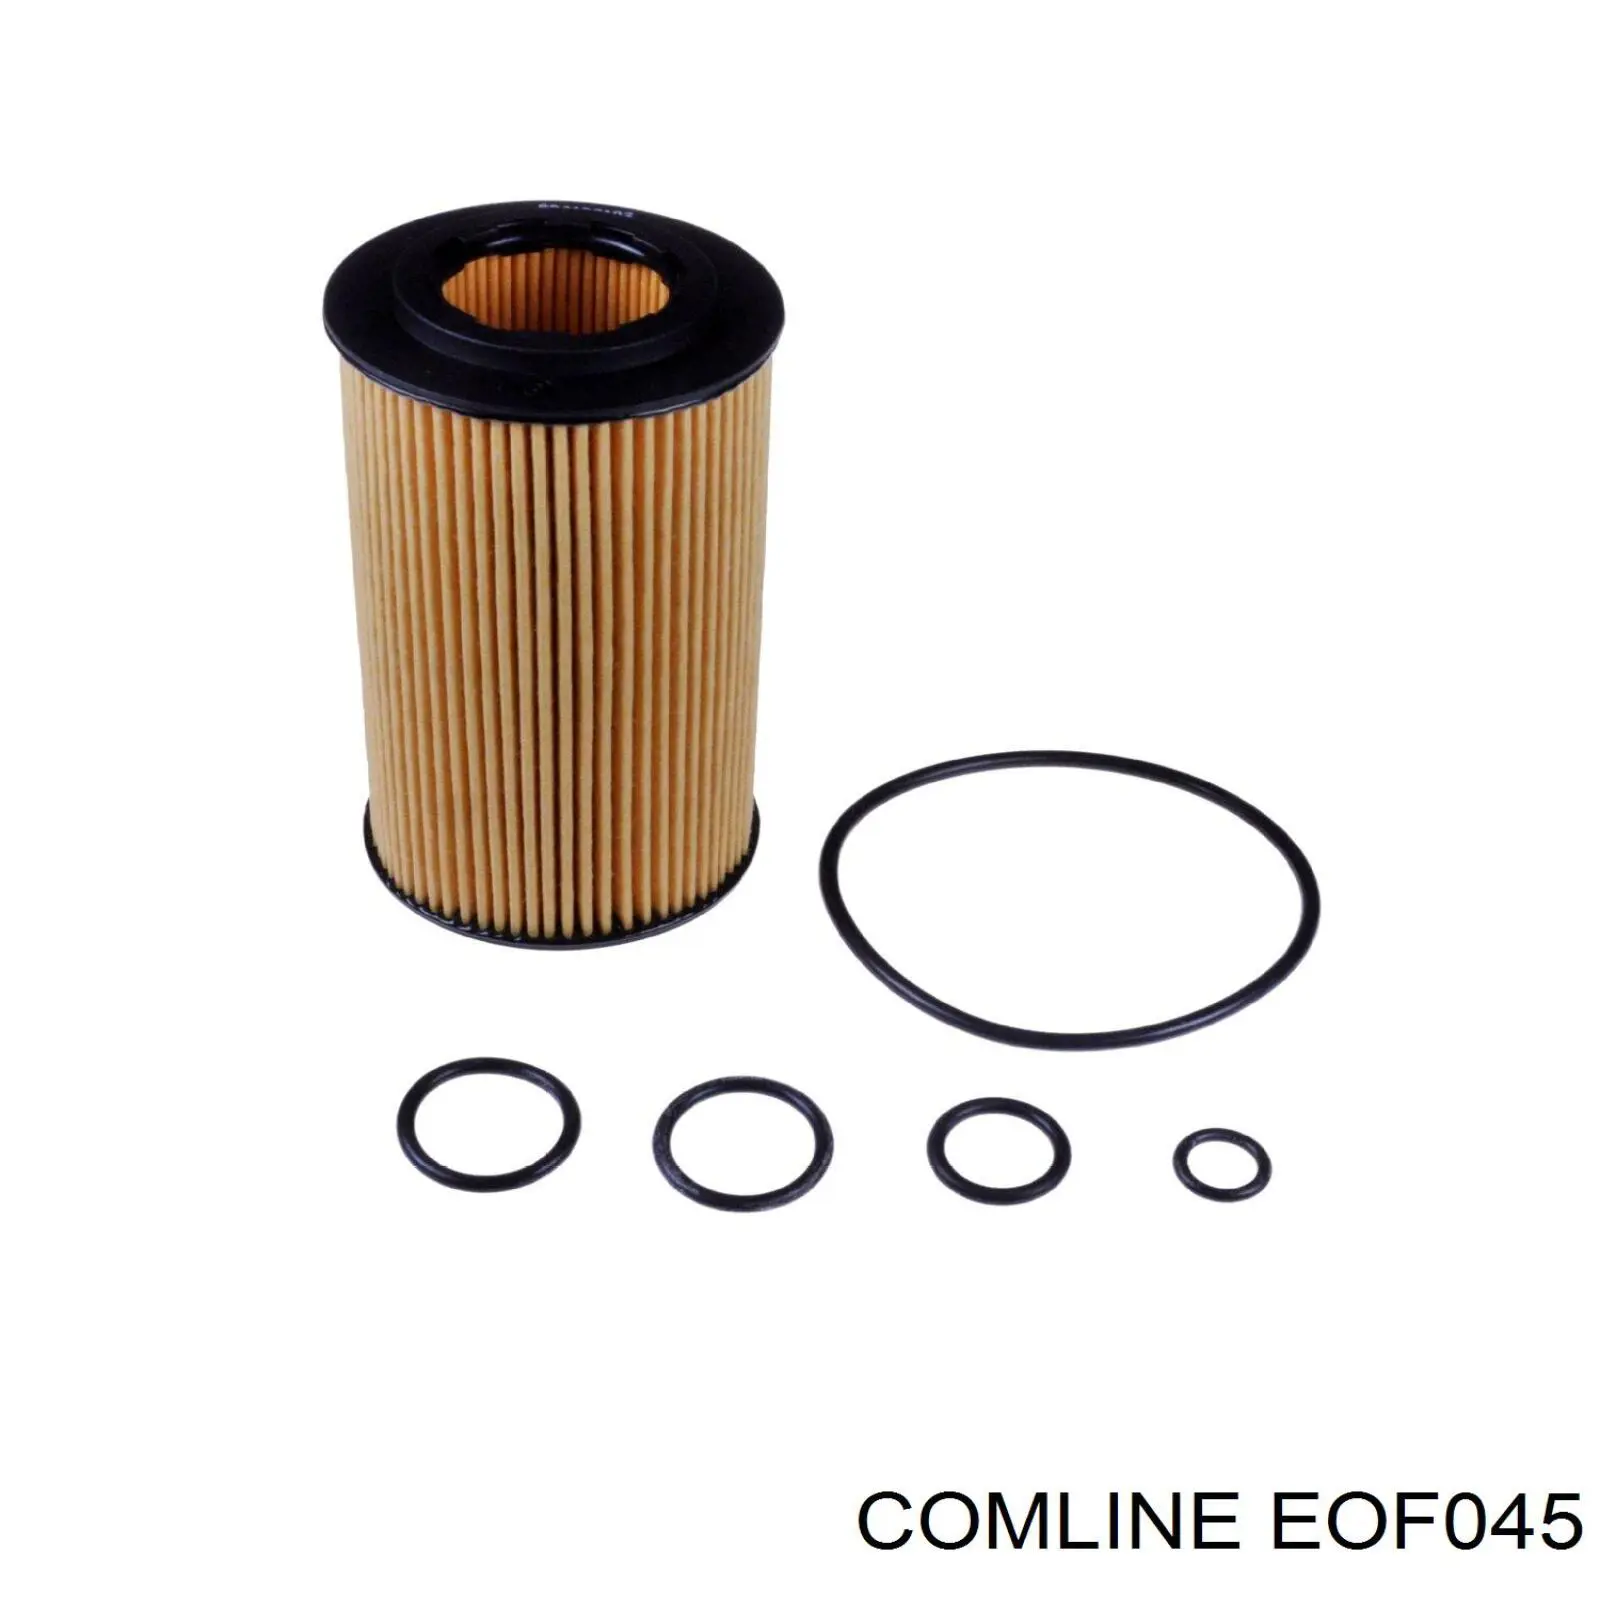 EOF045 Comline filtro de aceite